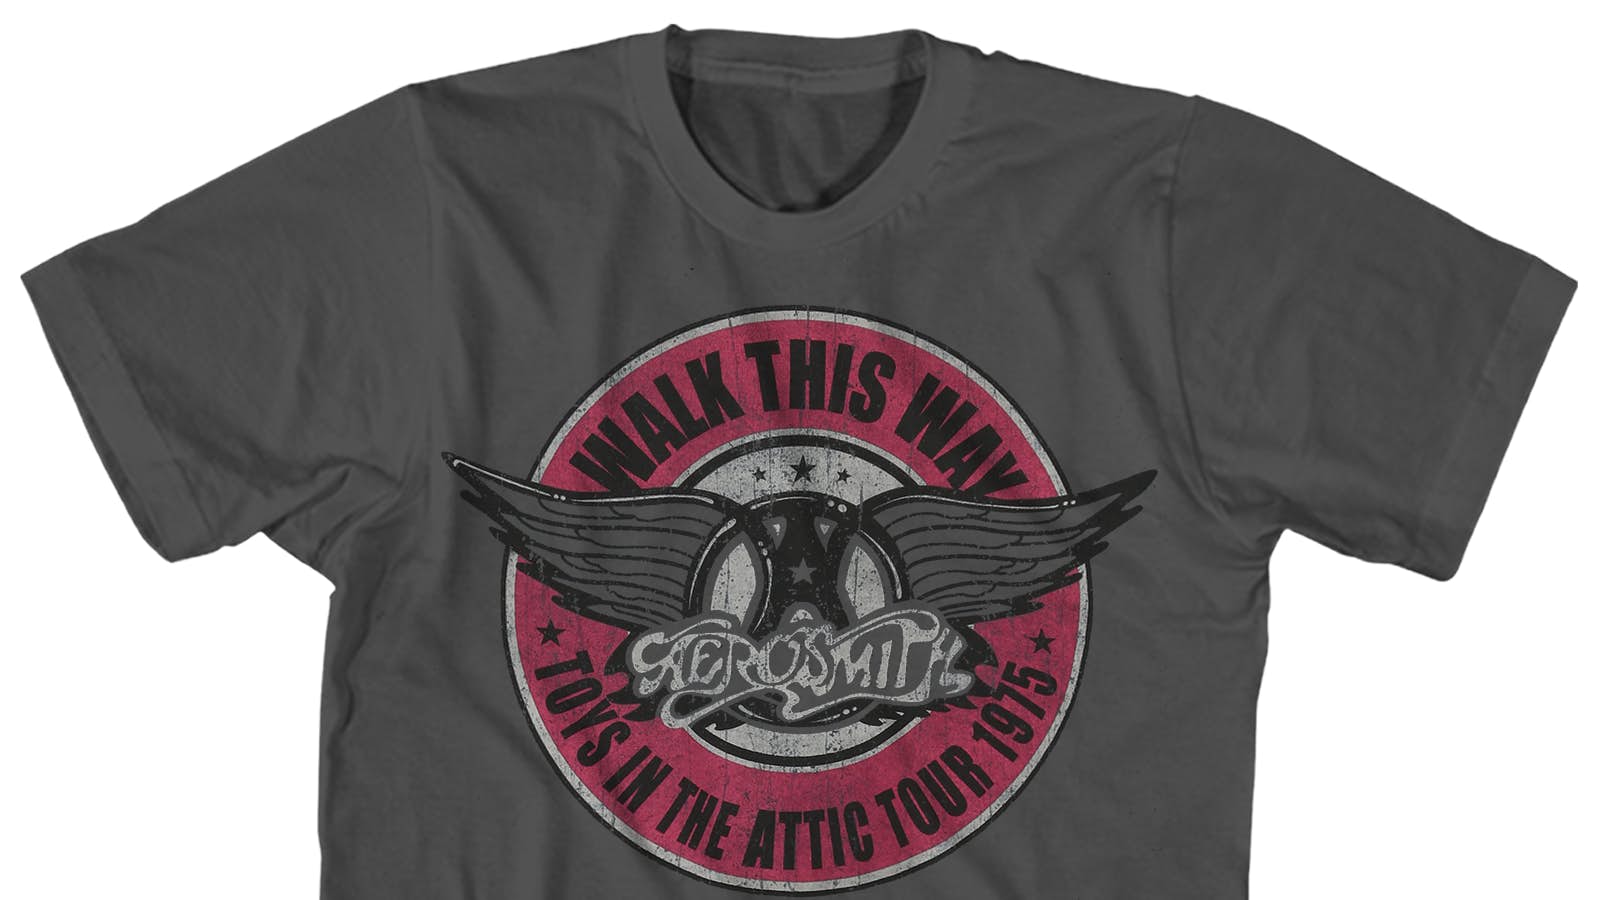 Aerosmith T-Shirt | Walk This Way Tour ’75 Aerosmith Shirt (Reissue)